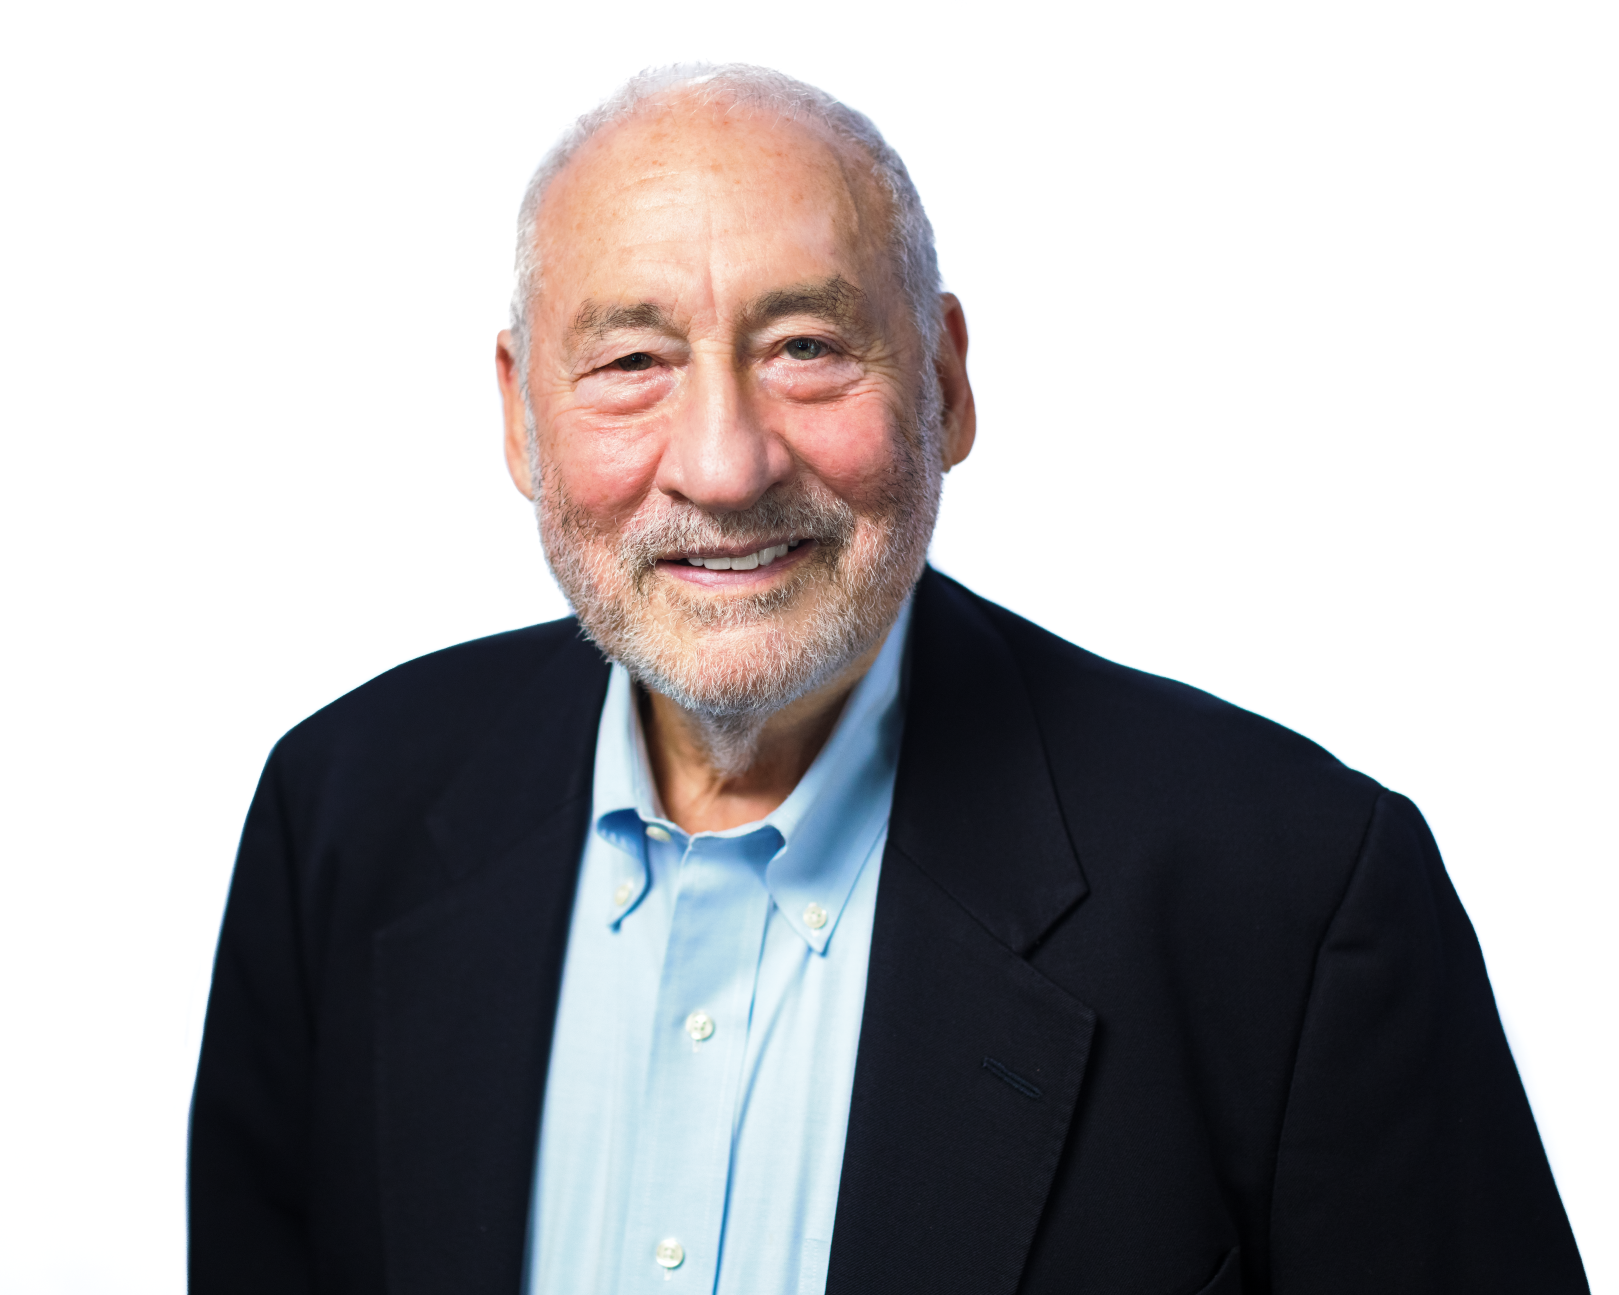 Joseph Stiglitz photo Credit: Ian DiSalvo